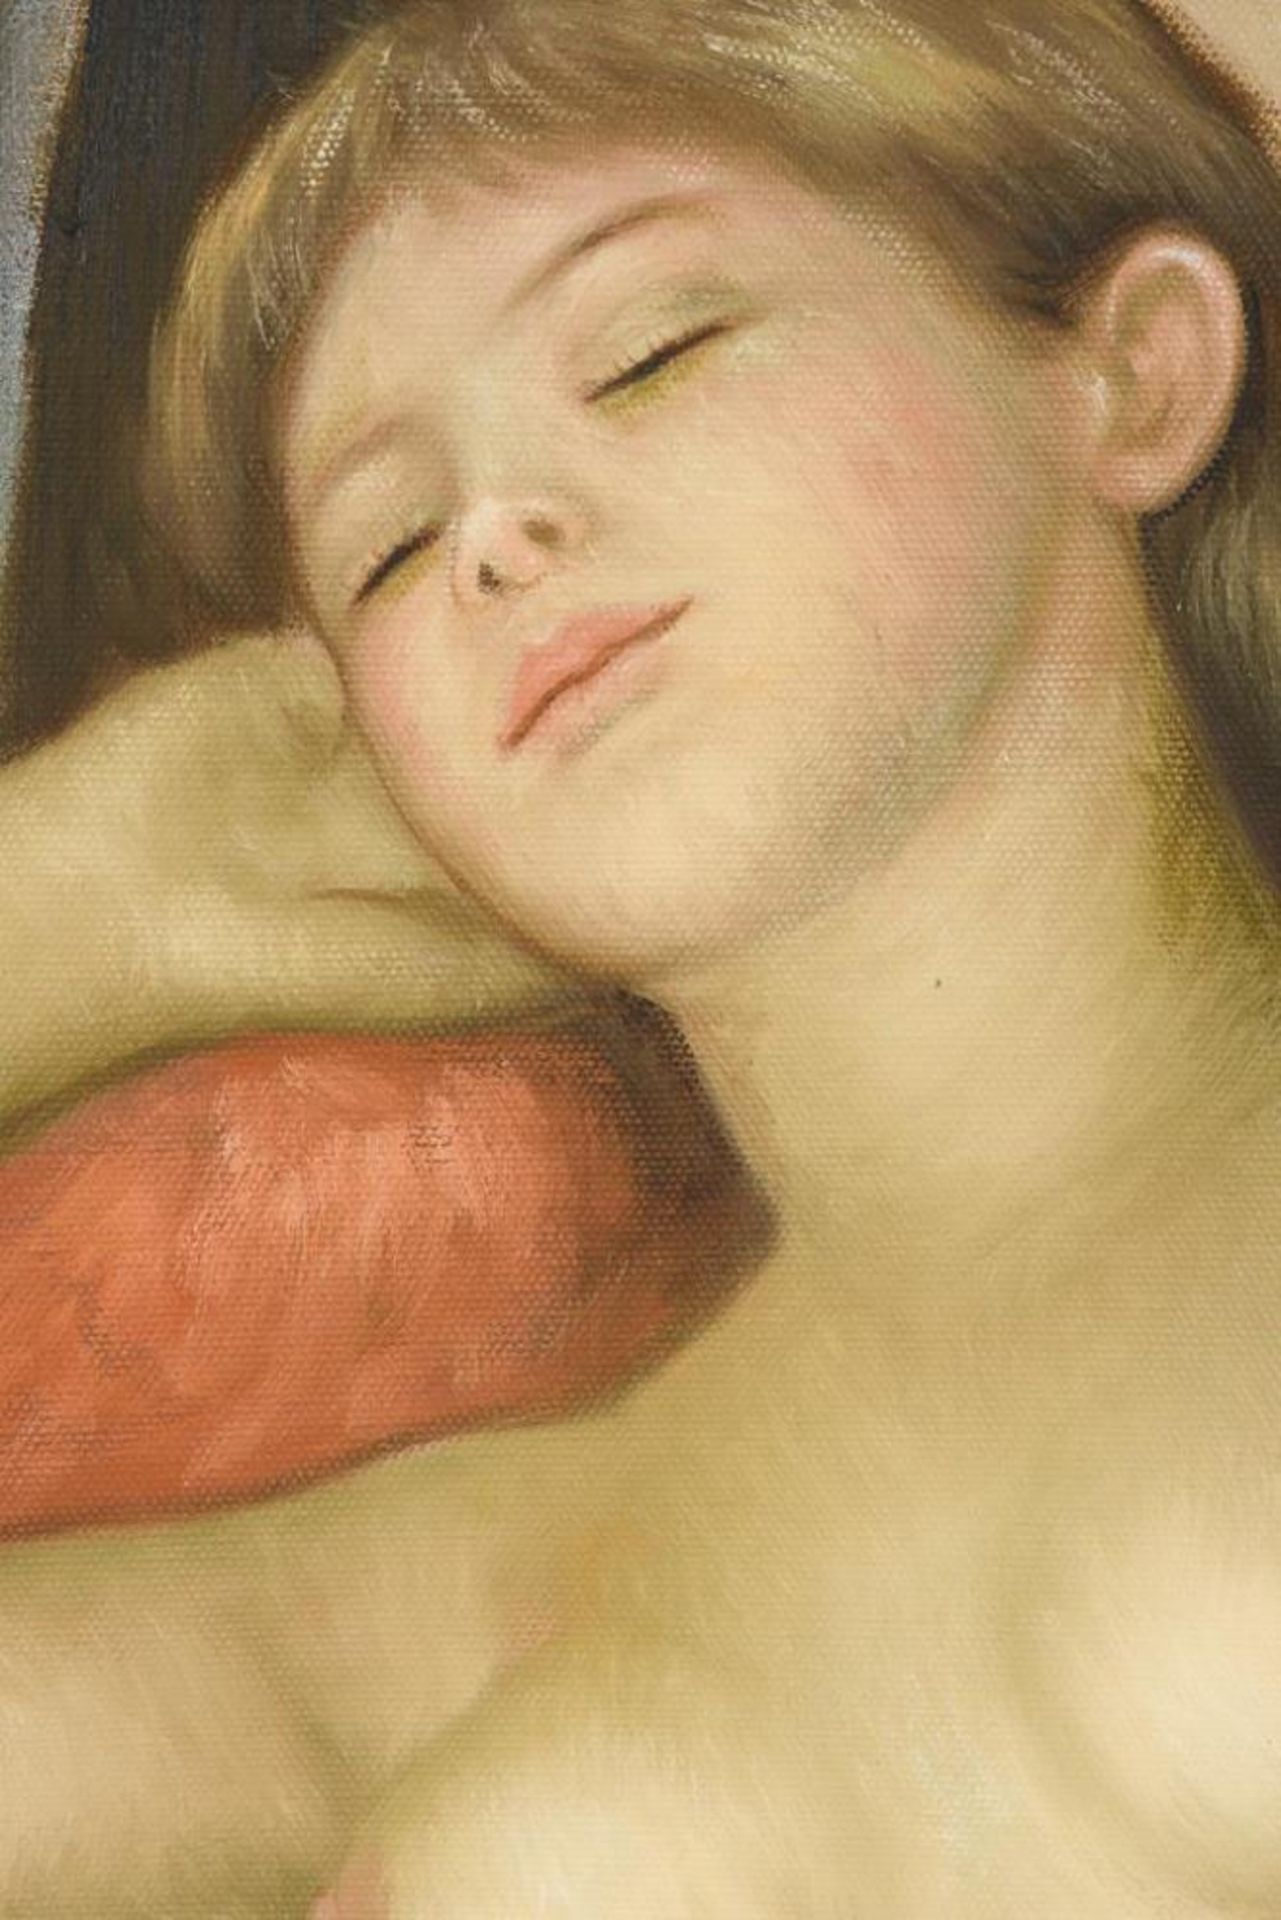 Kopie nach Pierre-Auguste Renoir "La Dormeuse" - Image 3 of 6